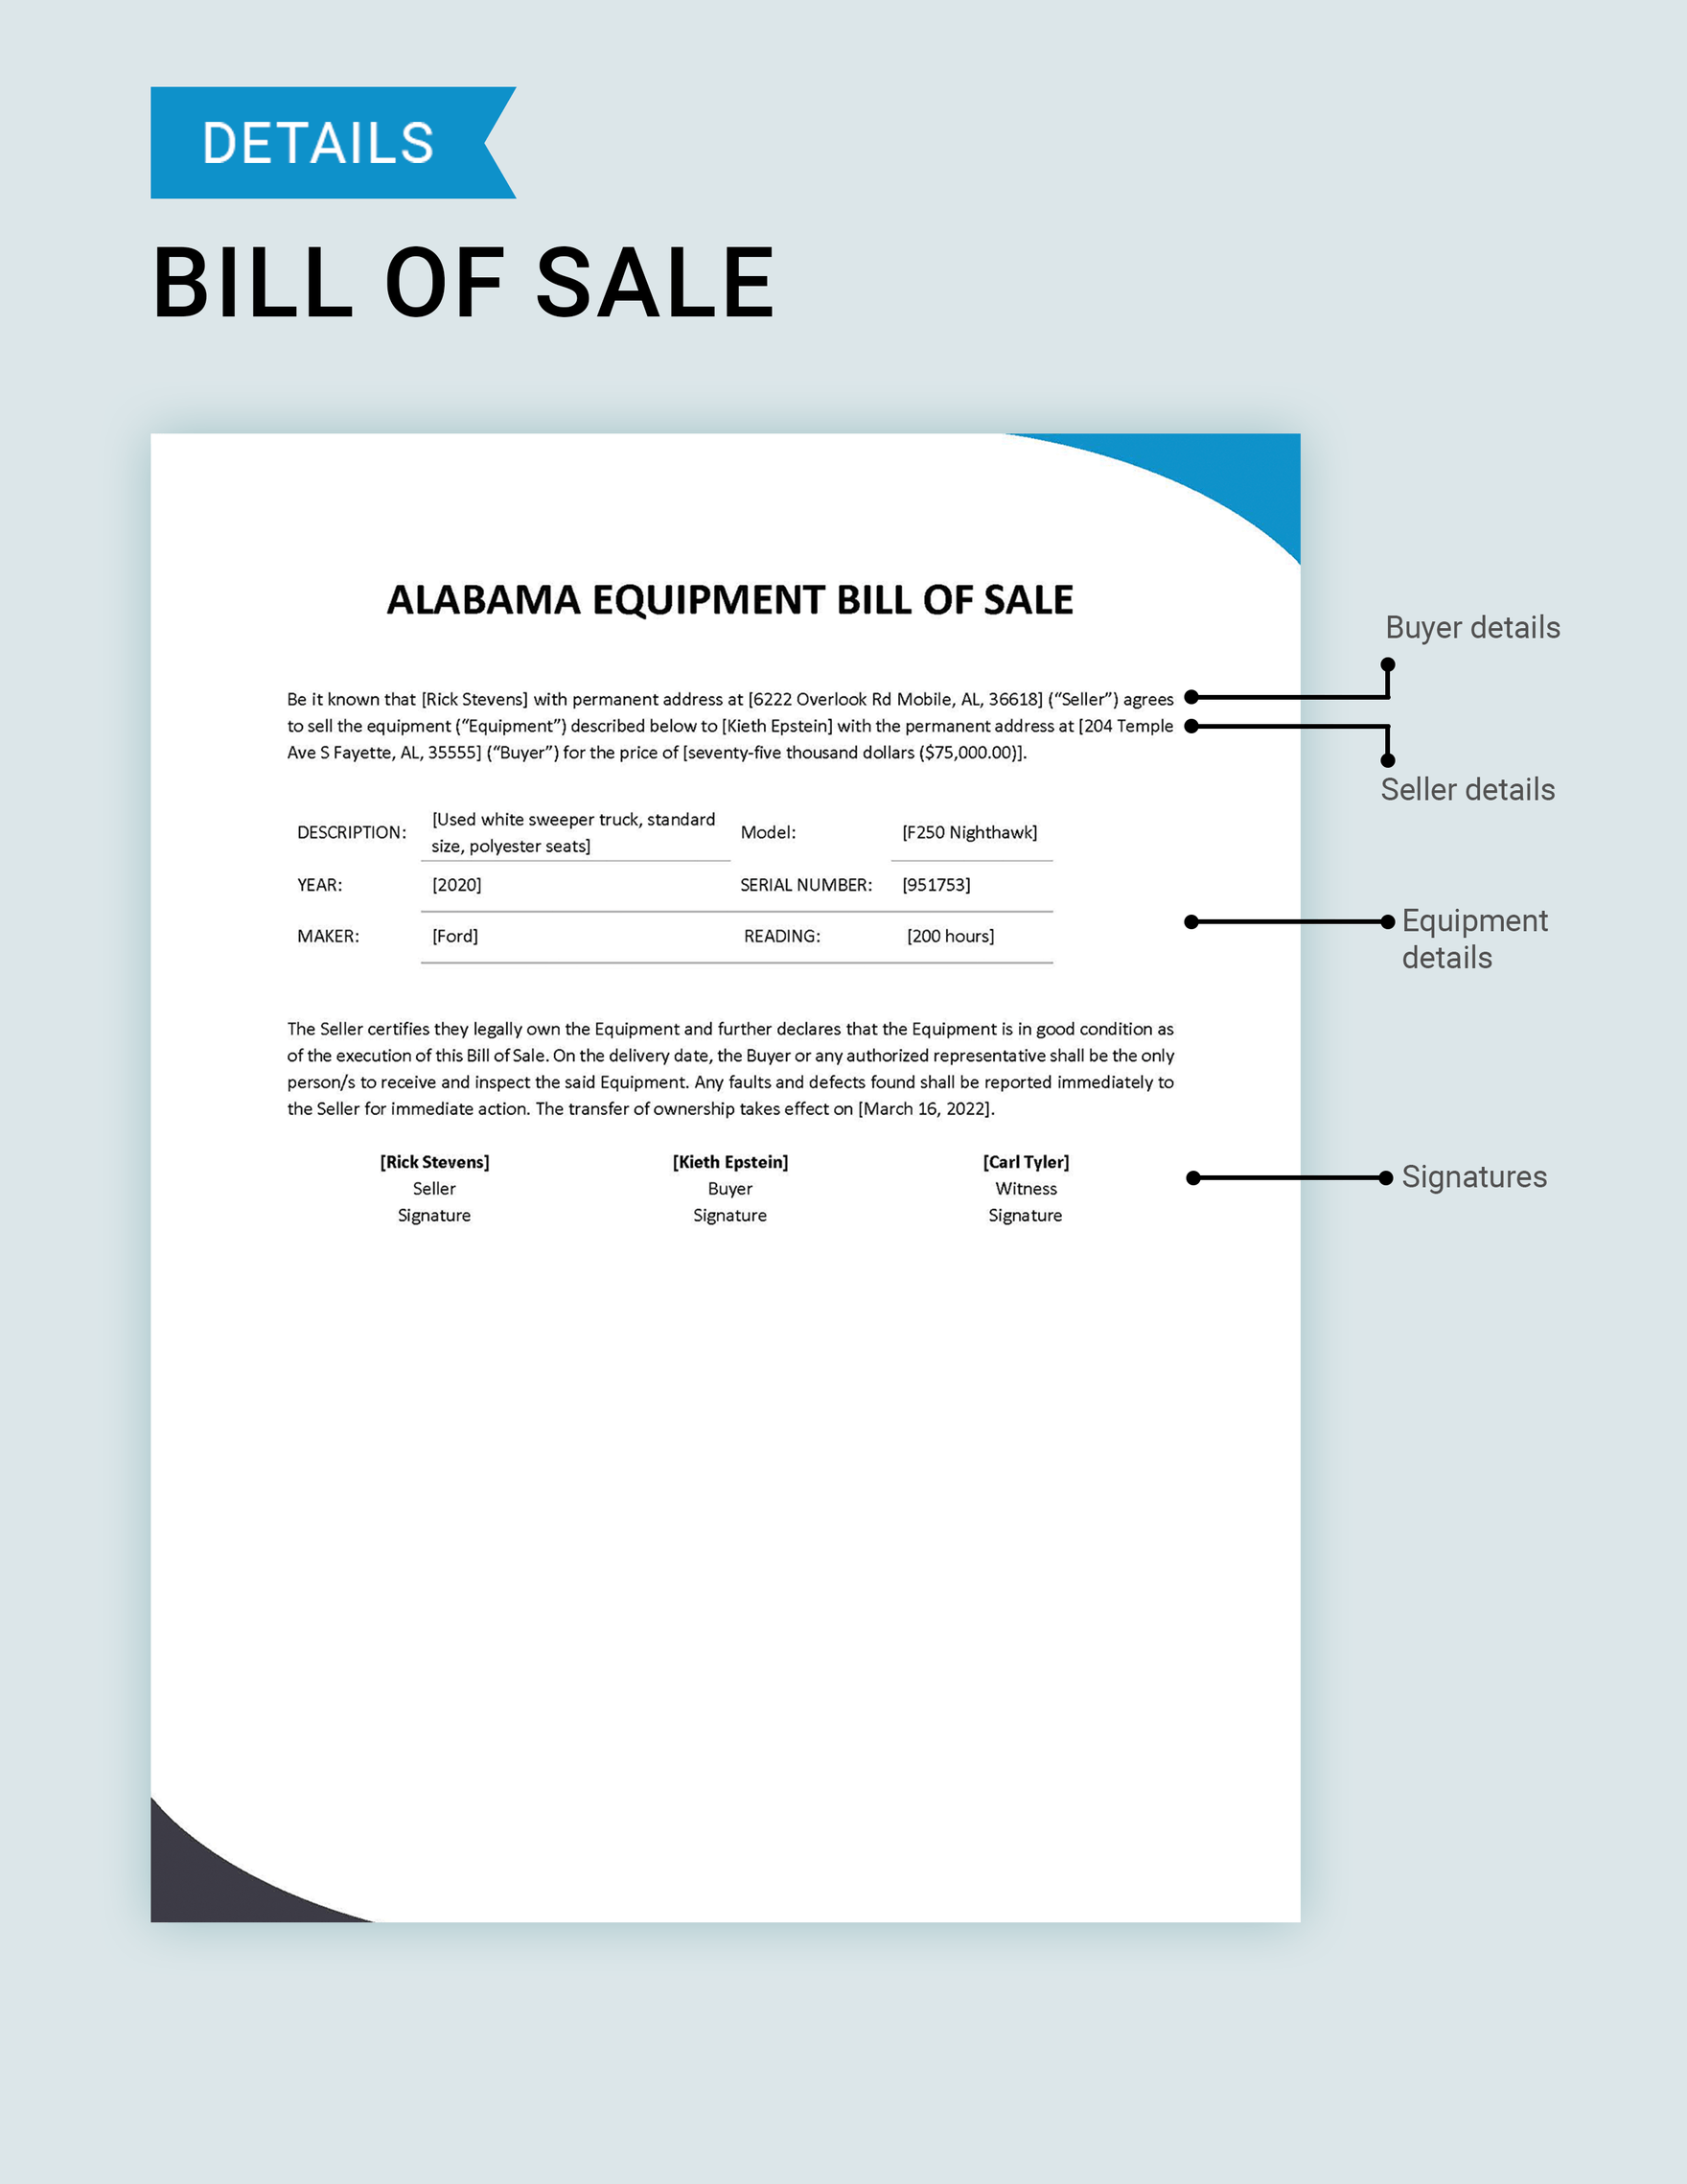 Alabama Equipment Bill of Sale Template